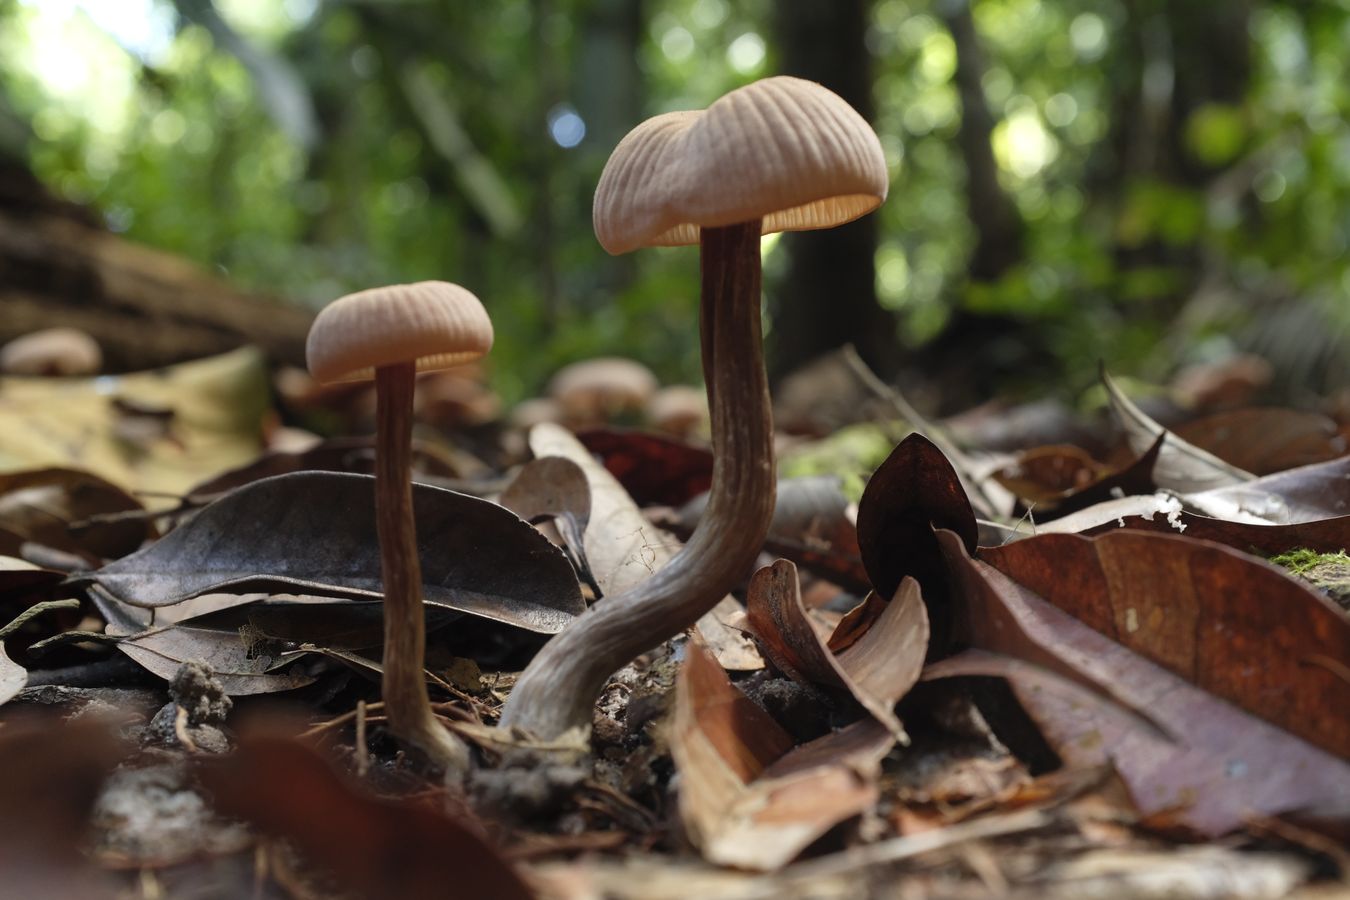 Fungus { Probably Laccaria Hydnangiaceae }